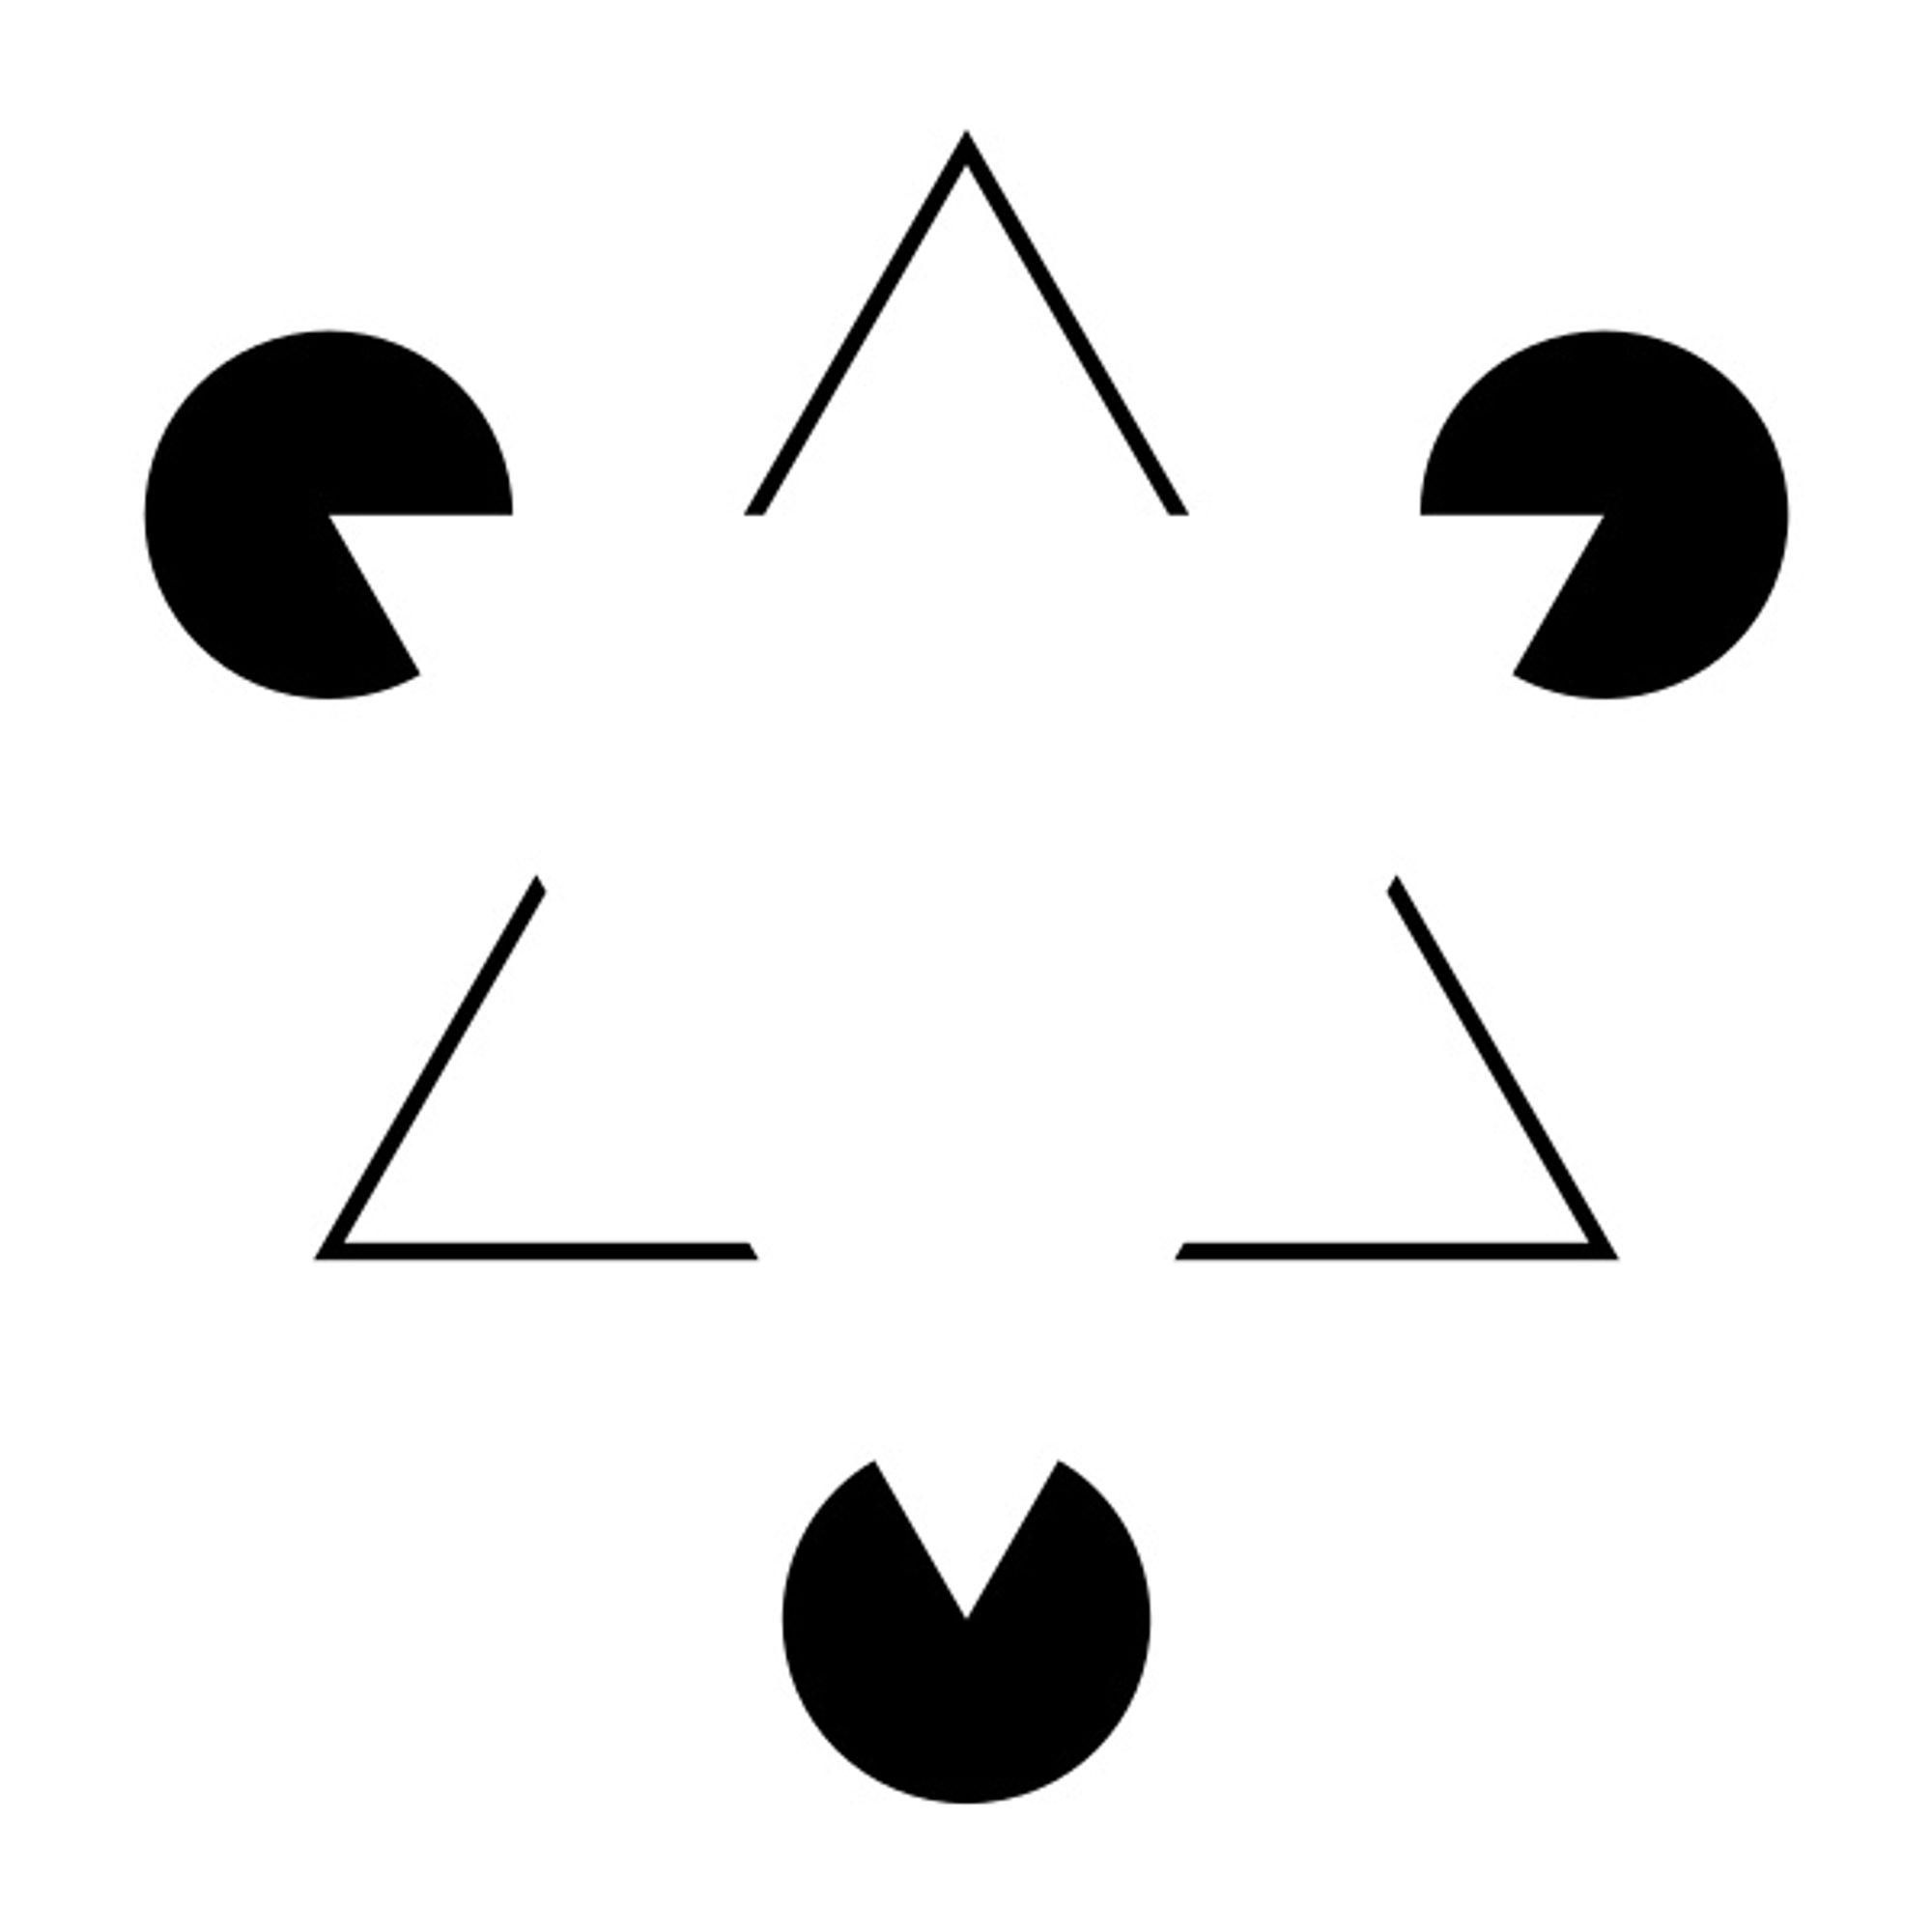 An illusory triangle